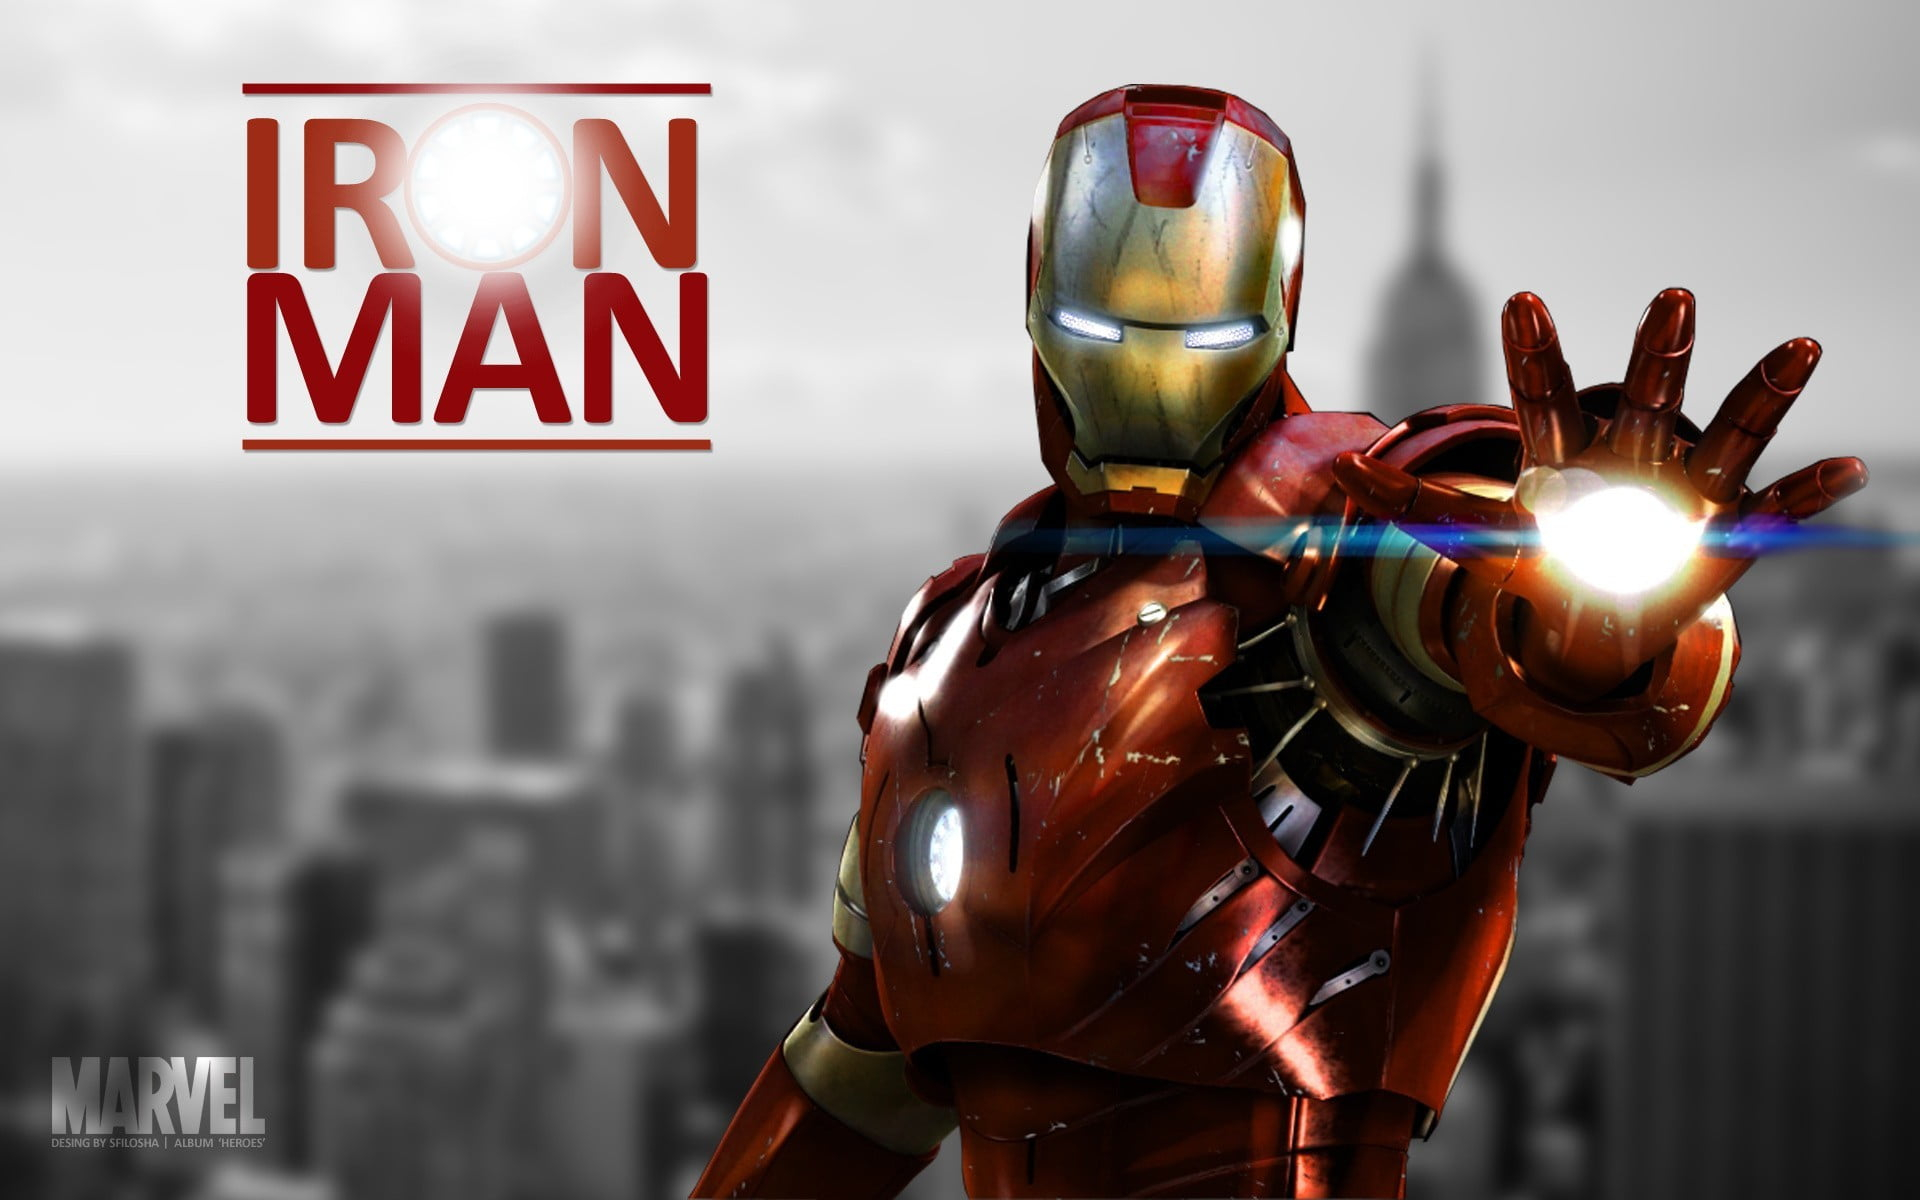 Marvel Iron Man wallpaper, Marvel Comics, superhero, The Avengers